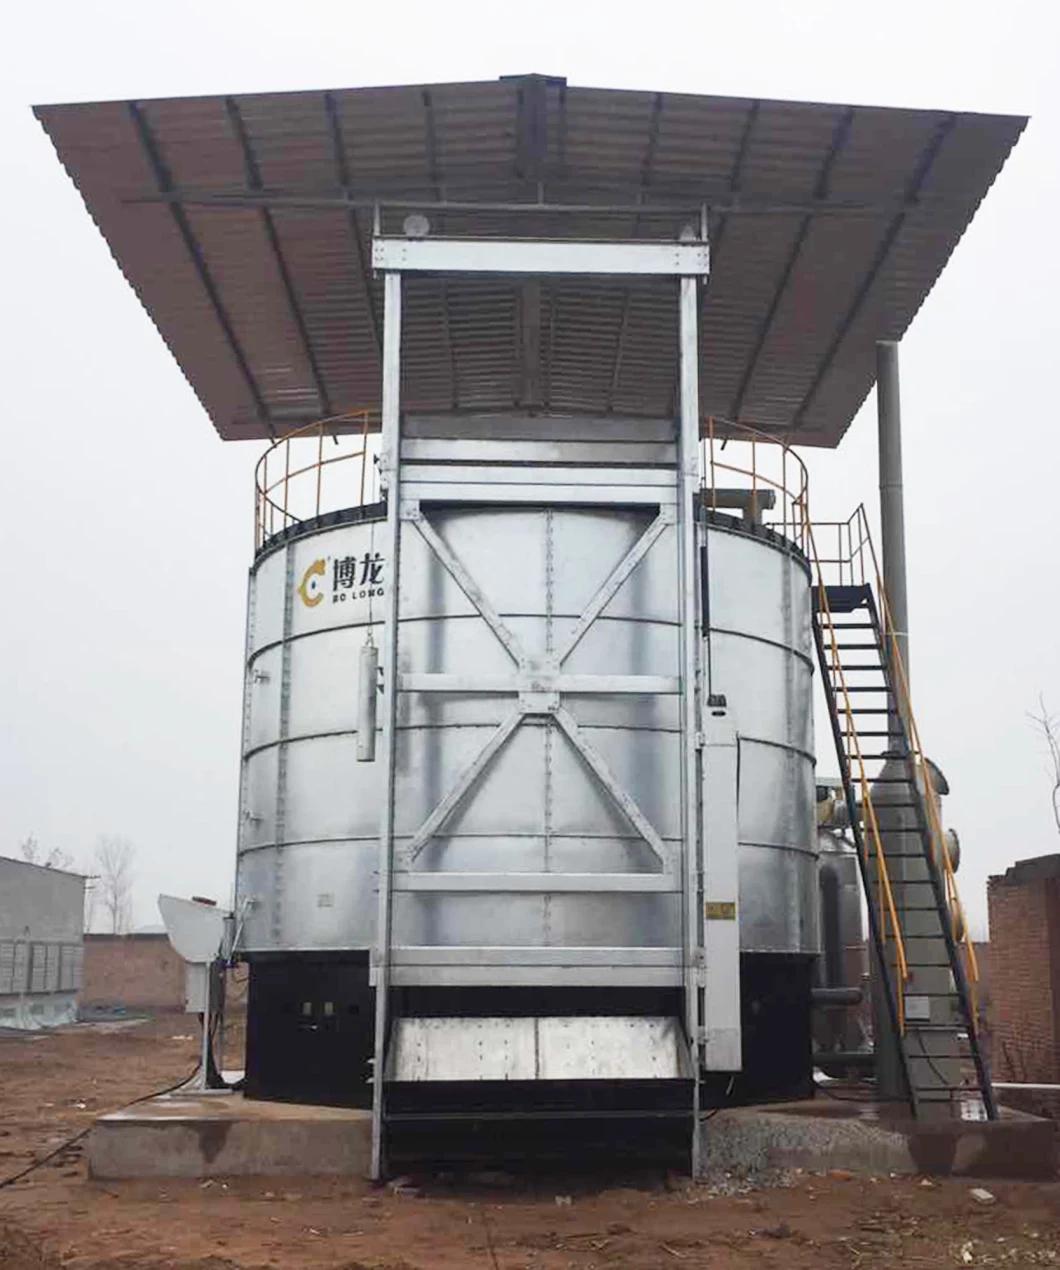 Animal Manure Composting Fertilizer Fermentation Continually Discharge Equipment